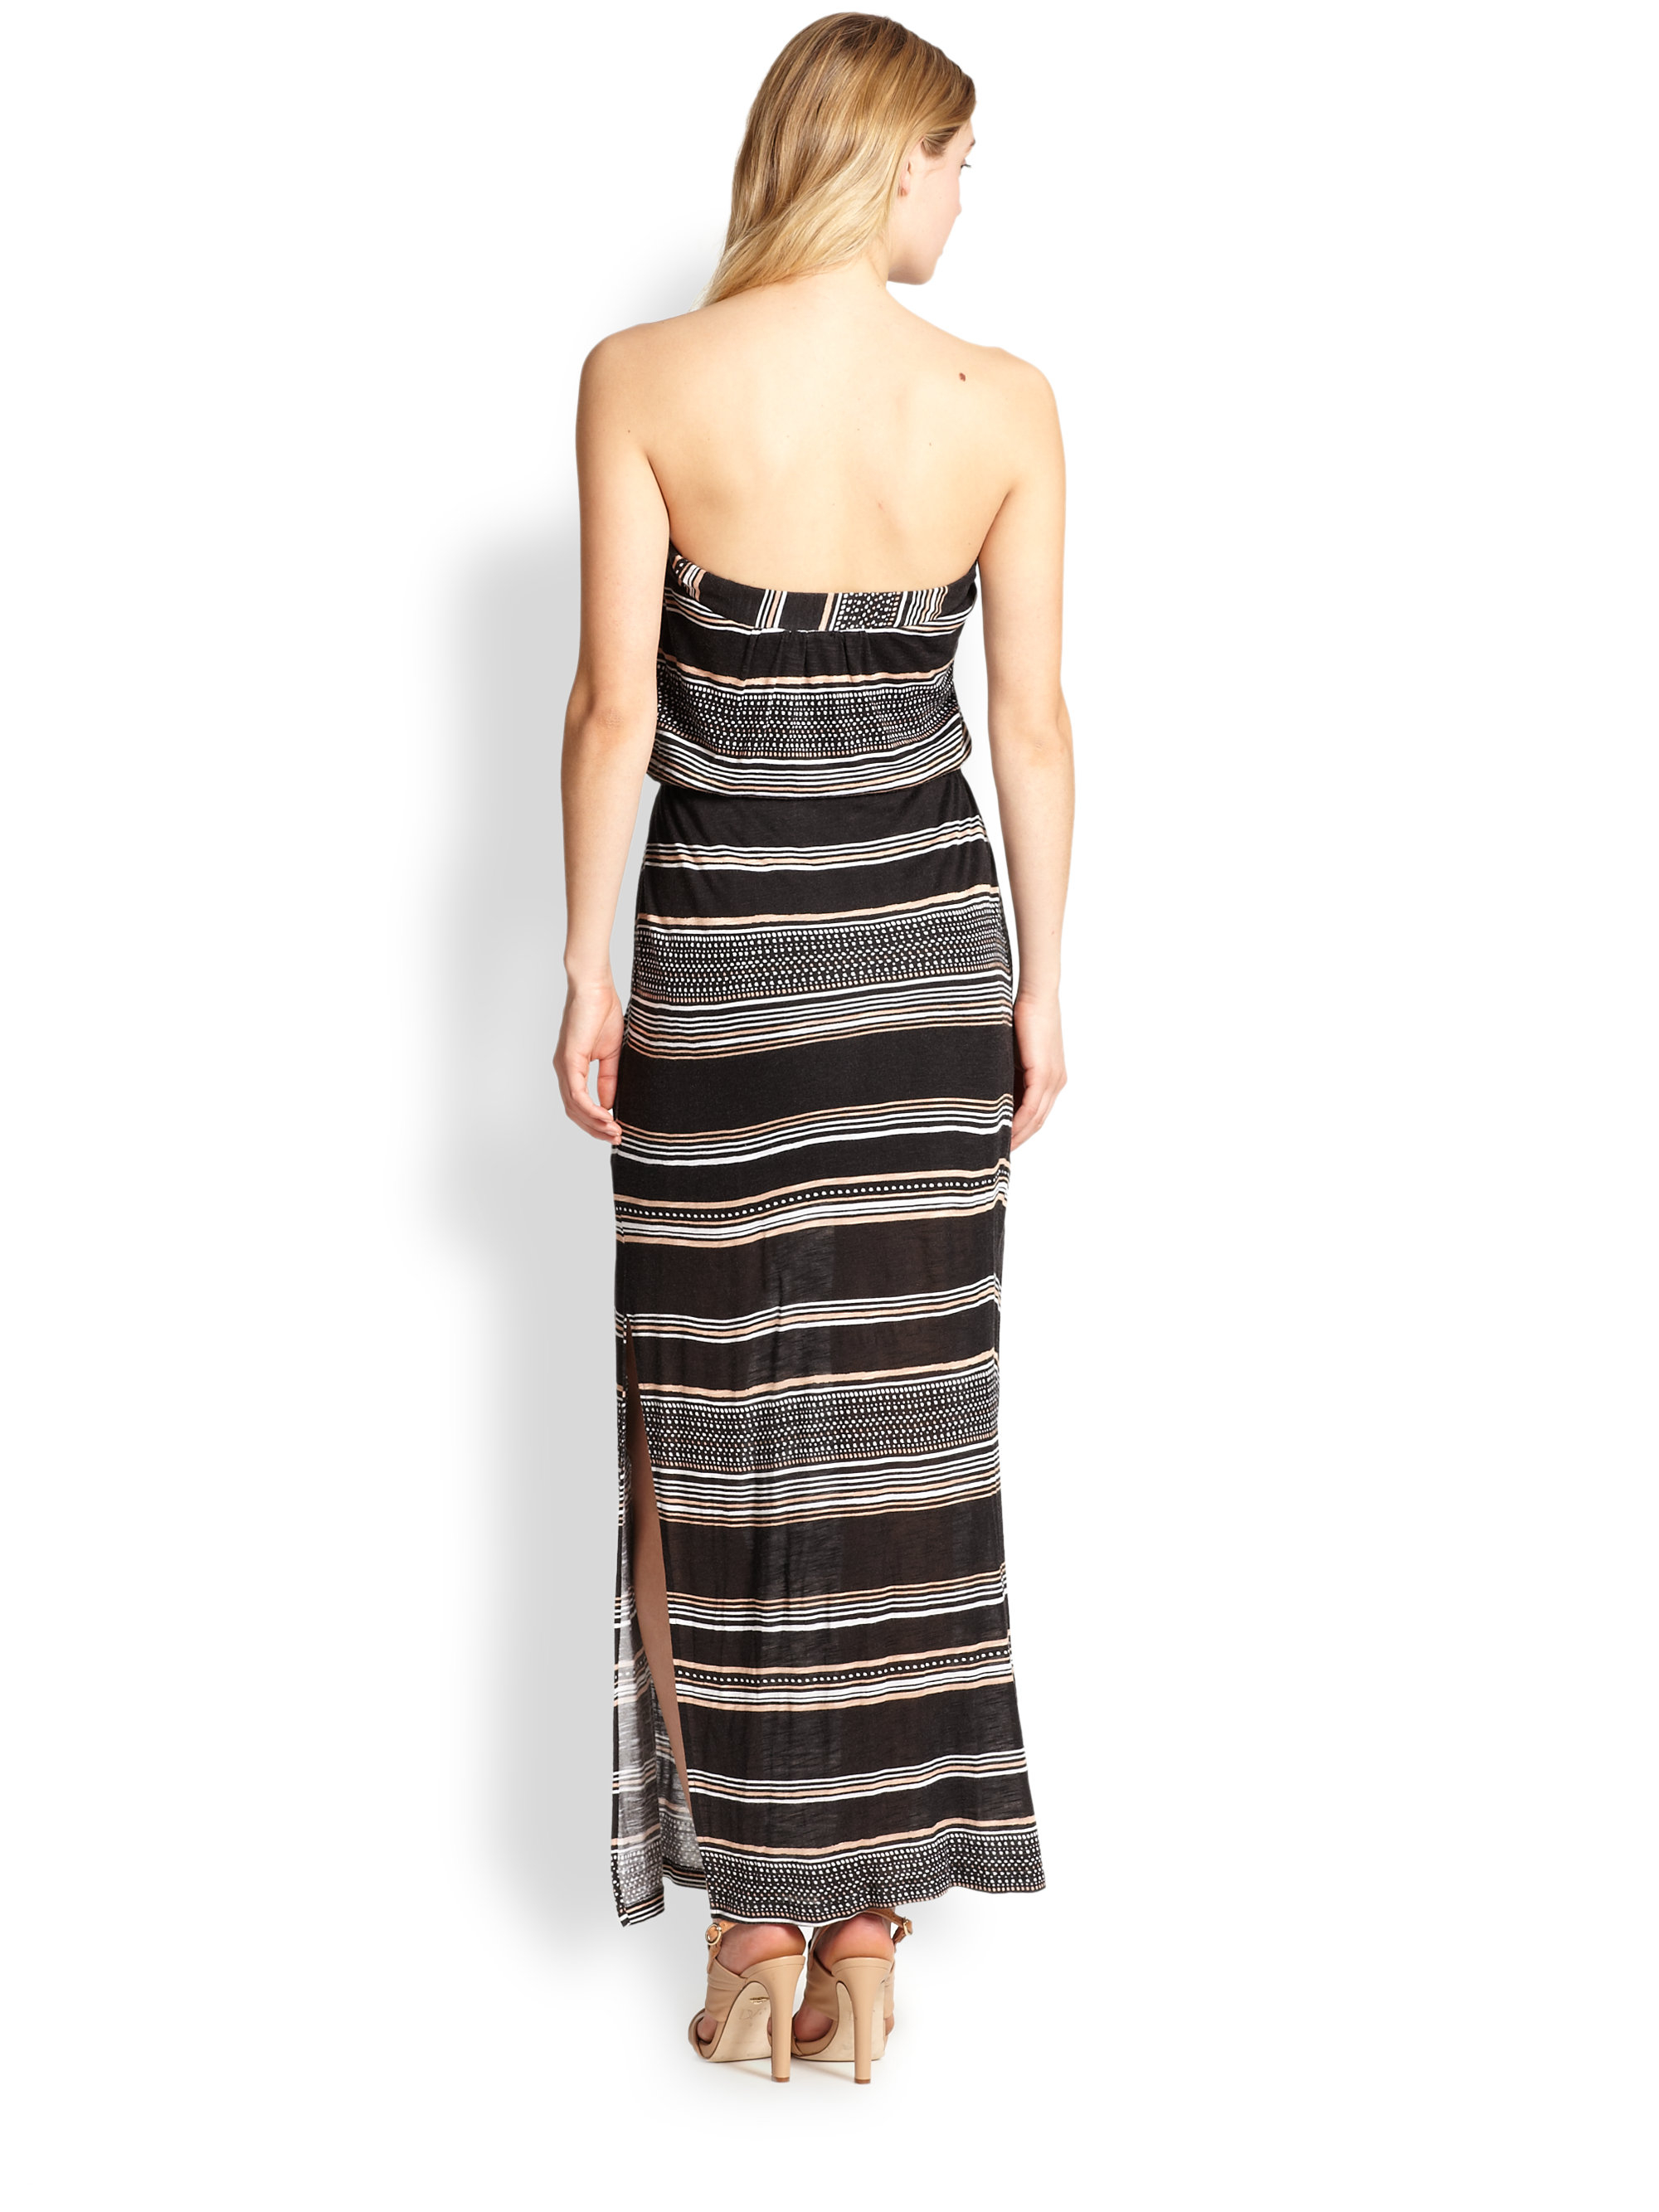 Lyst - Splendid Strapless Striped Jersey Maxi Dress in Black